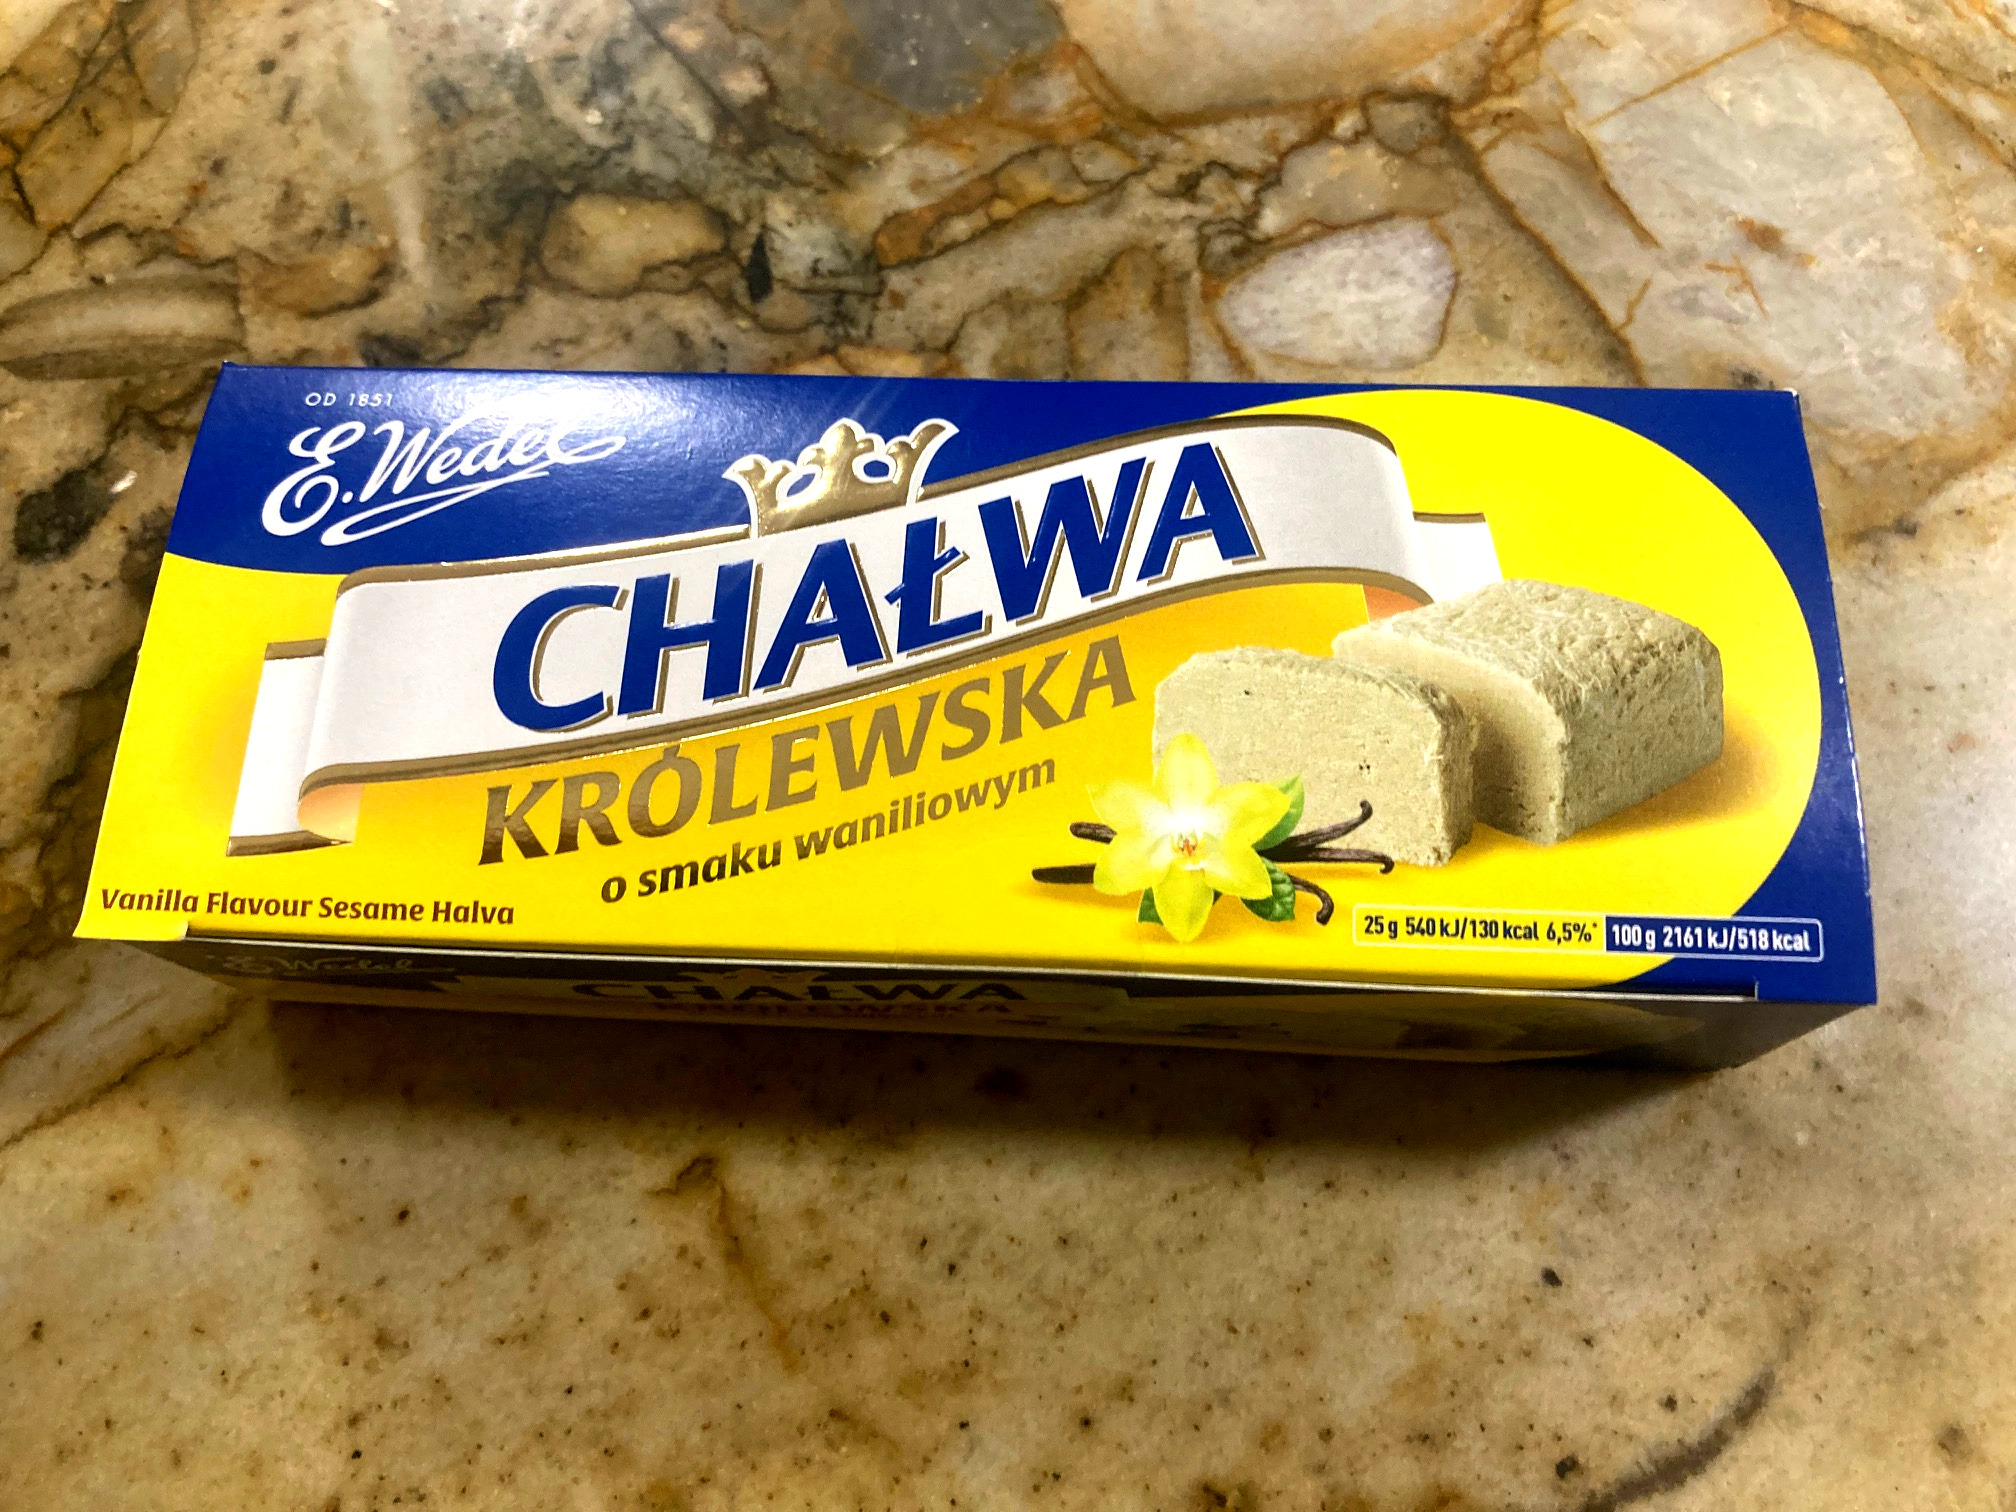 Chalwa Krolewska